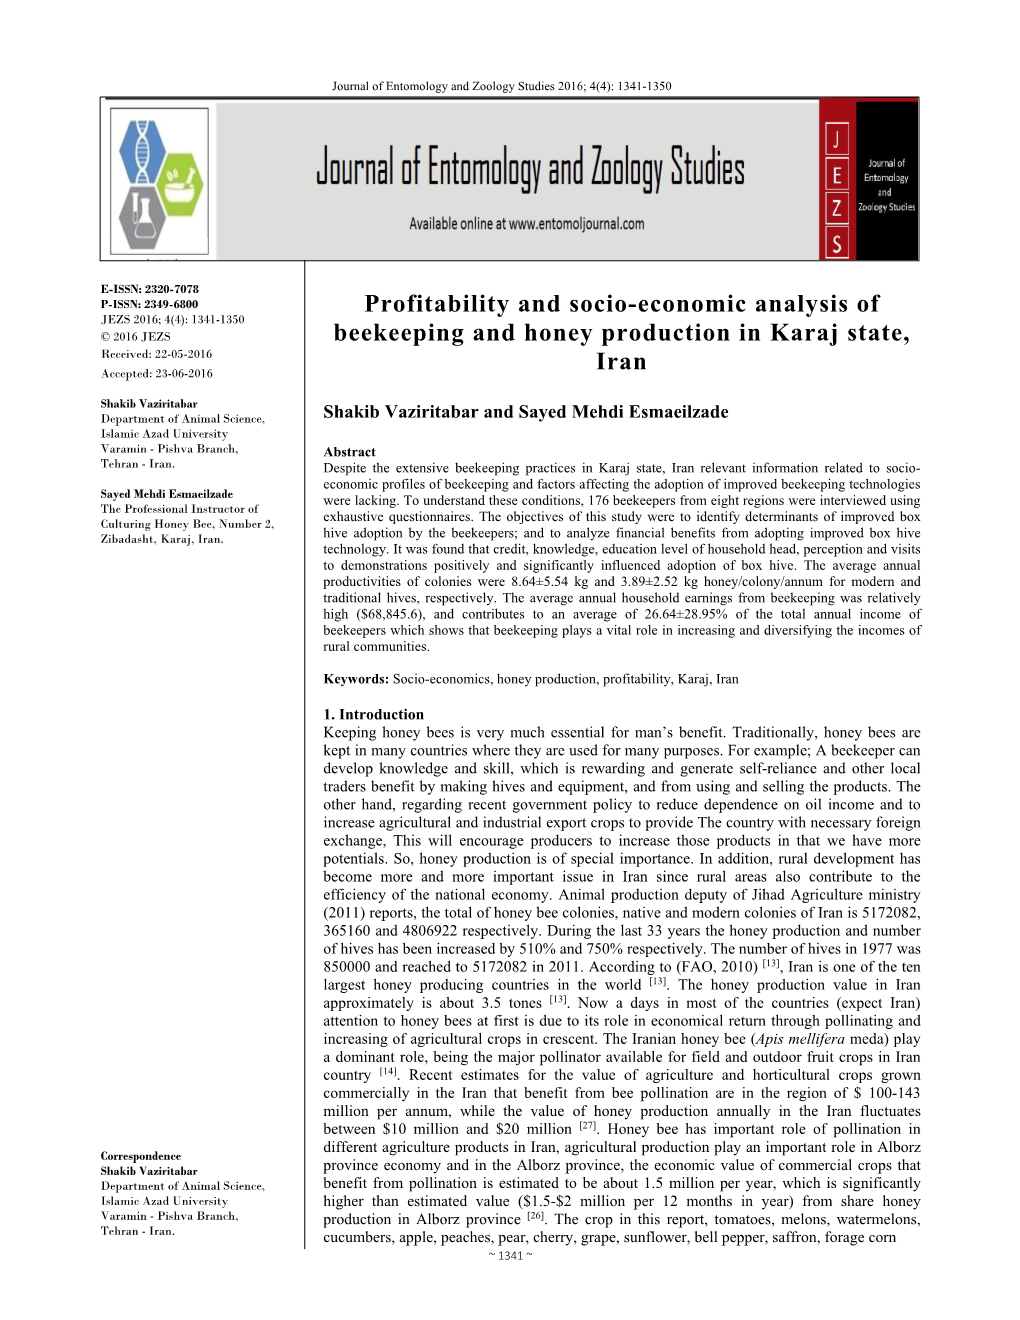 Profitability and Socio-Economic Analysis of Beekeeping and Honey